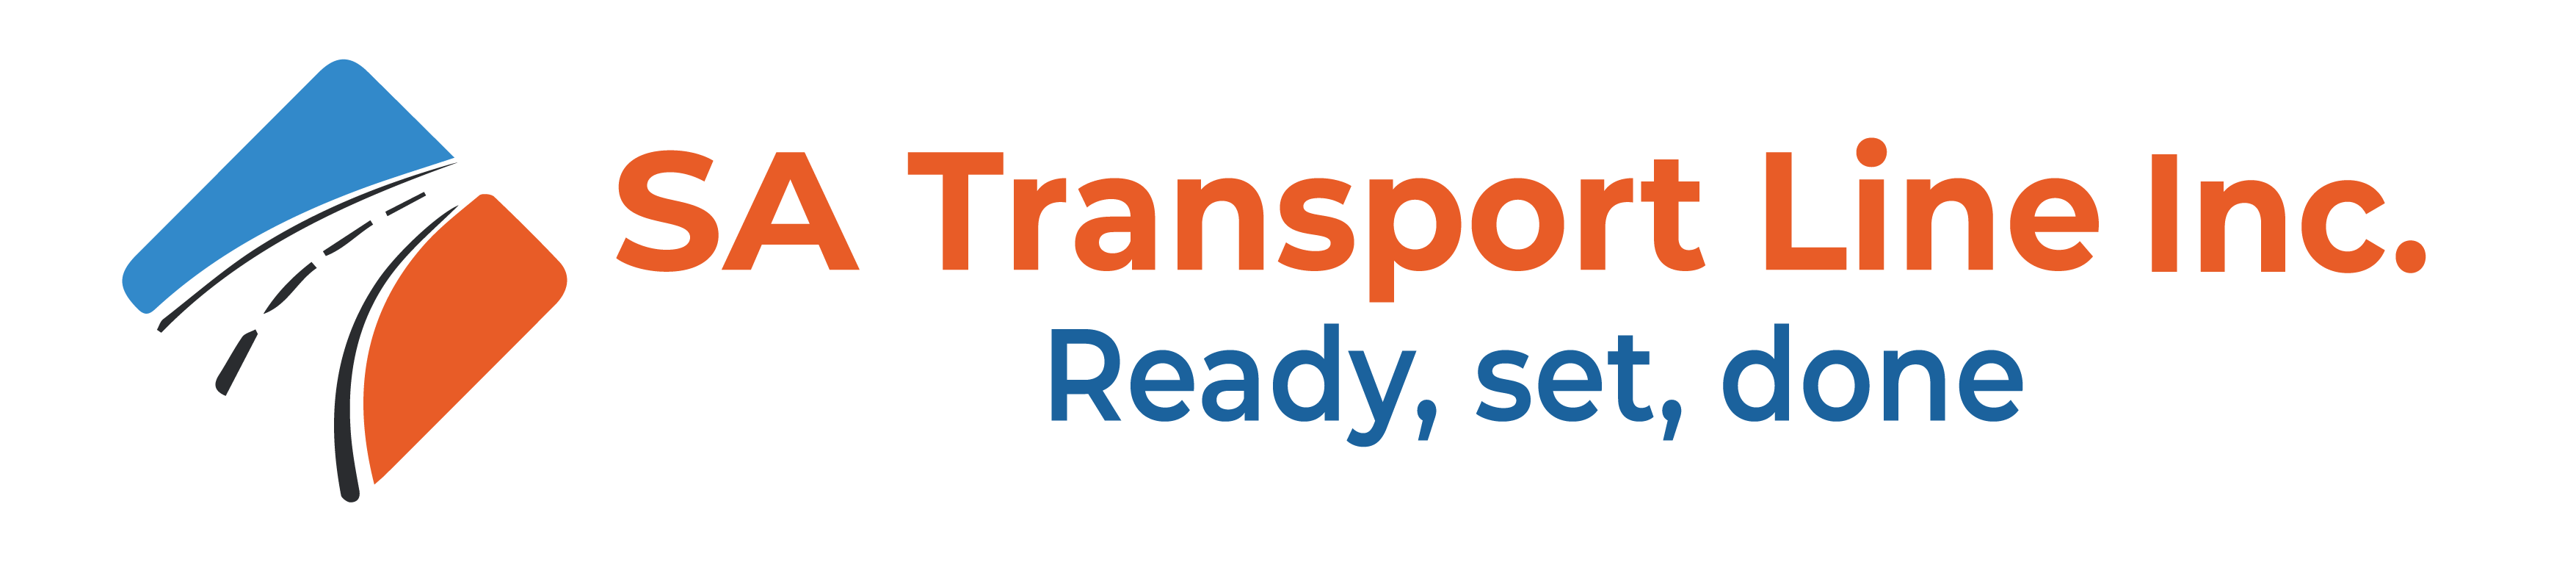 SA Transport line Inc in Canada